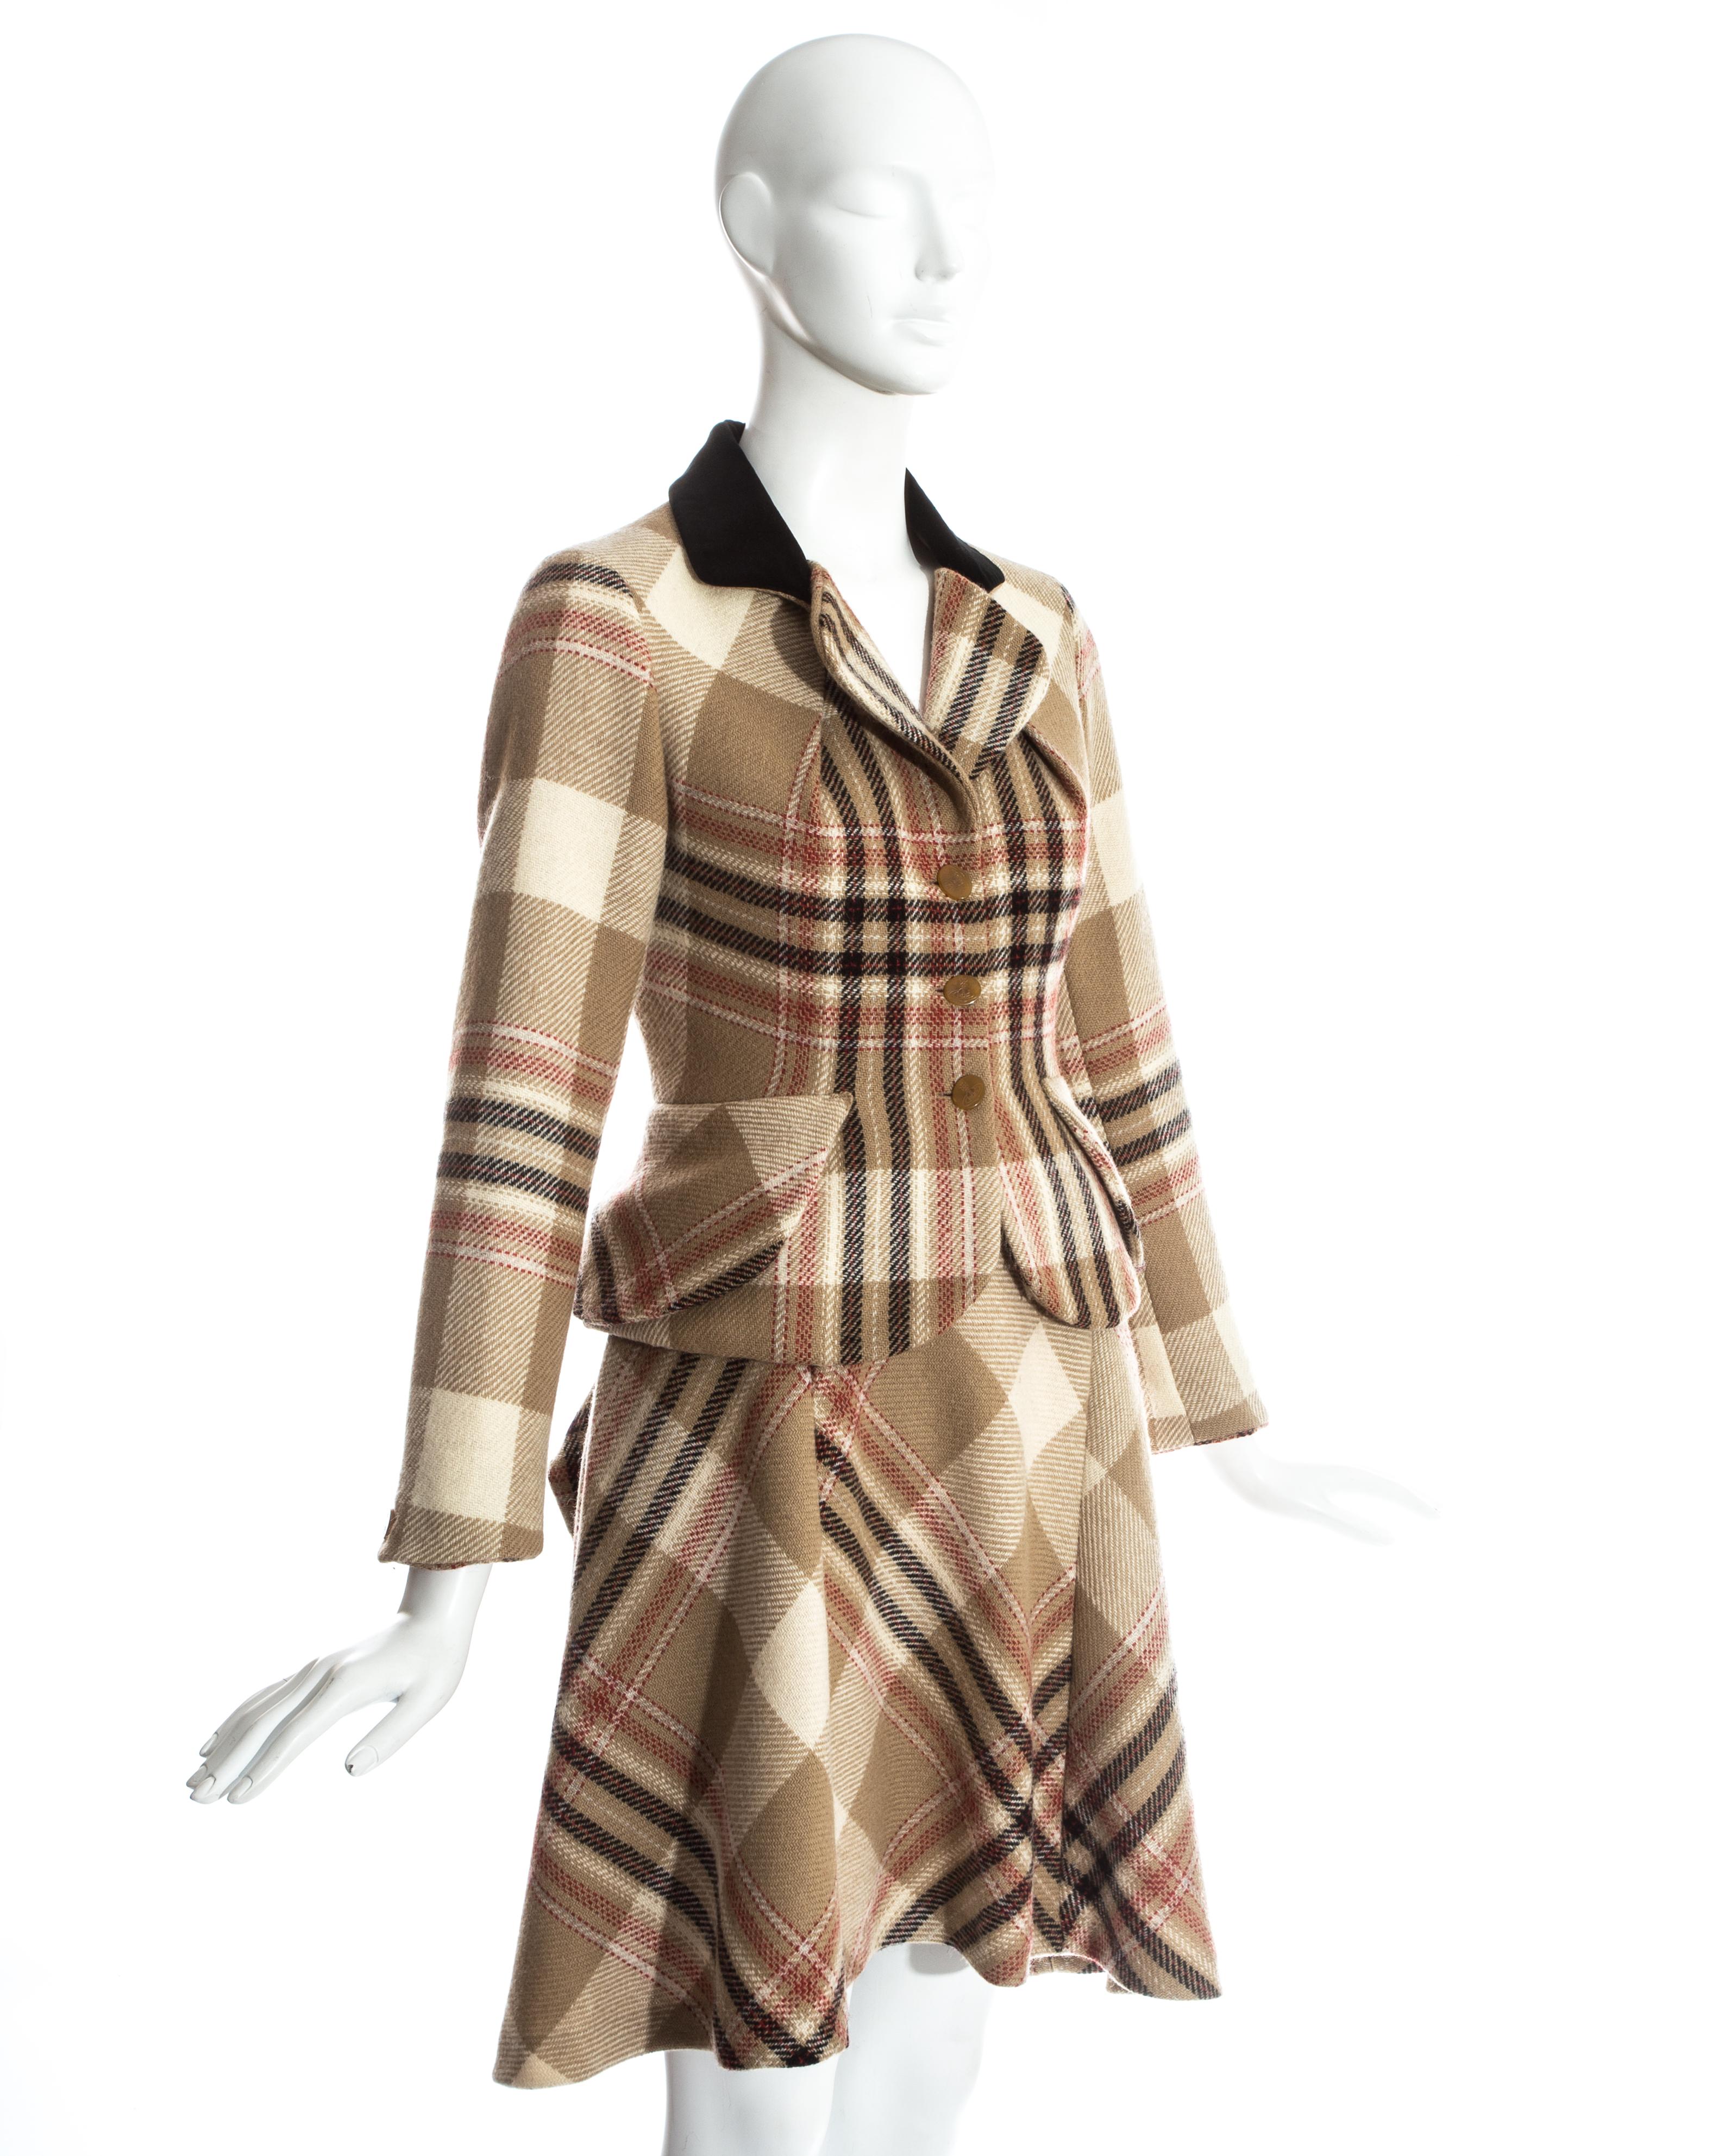 Women's Vivienne Westwood tartan wool bustled skirt suit, c. 1993